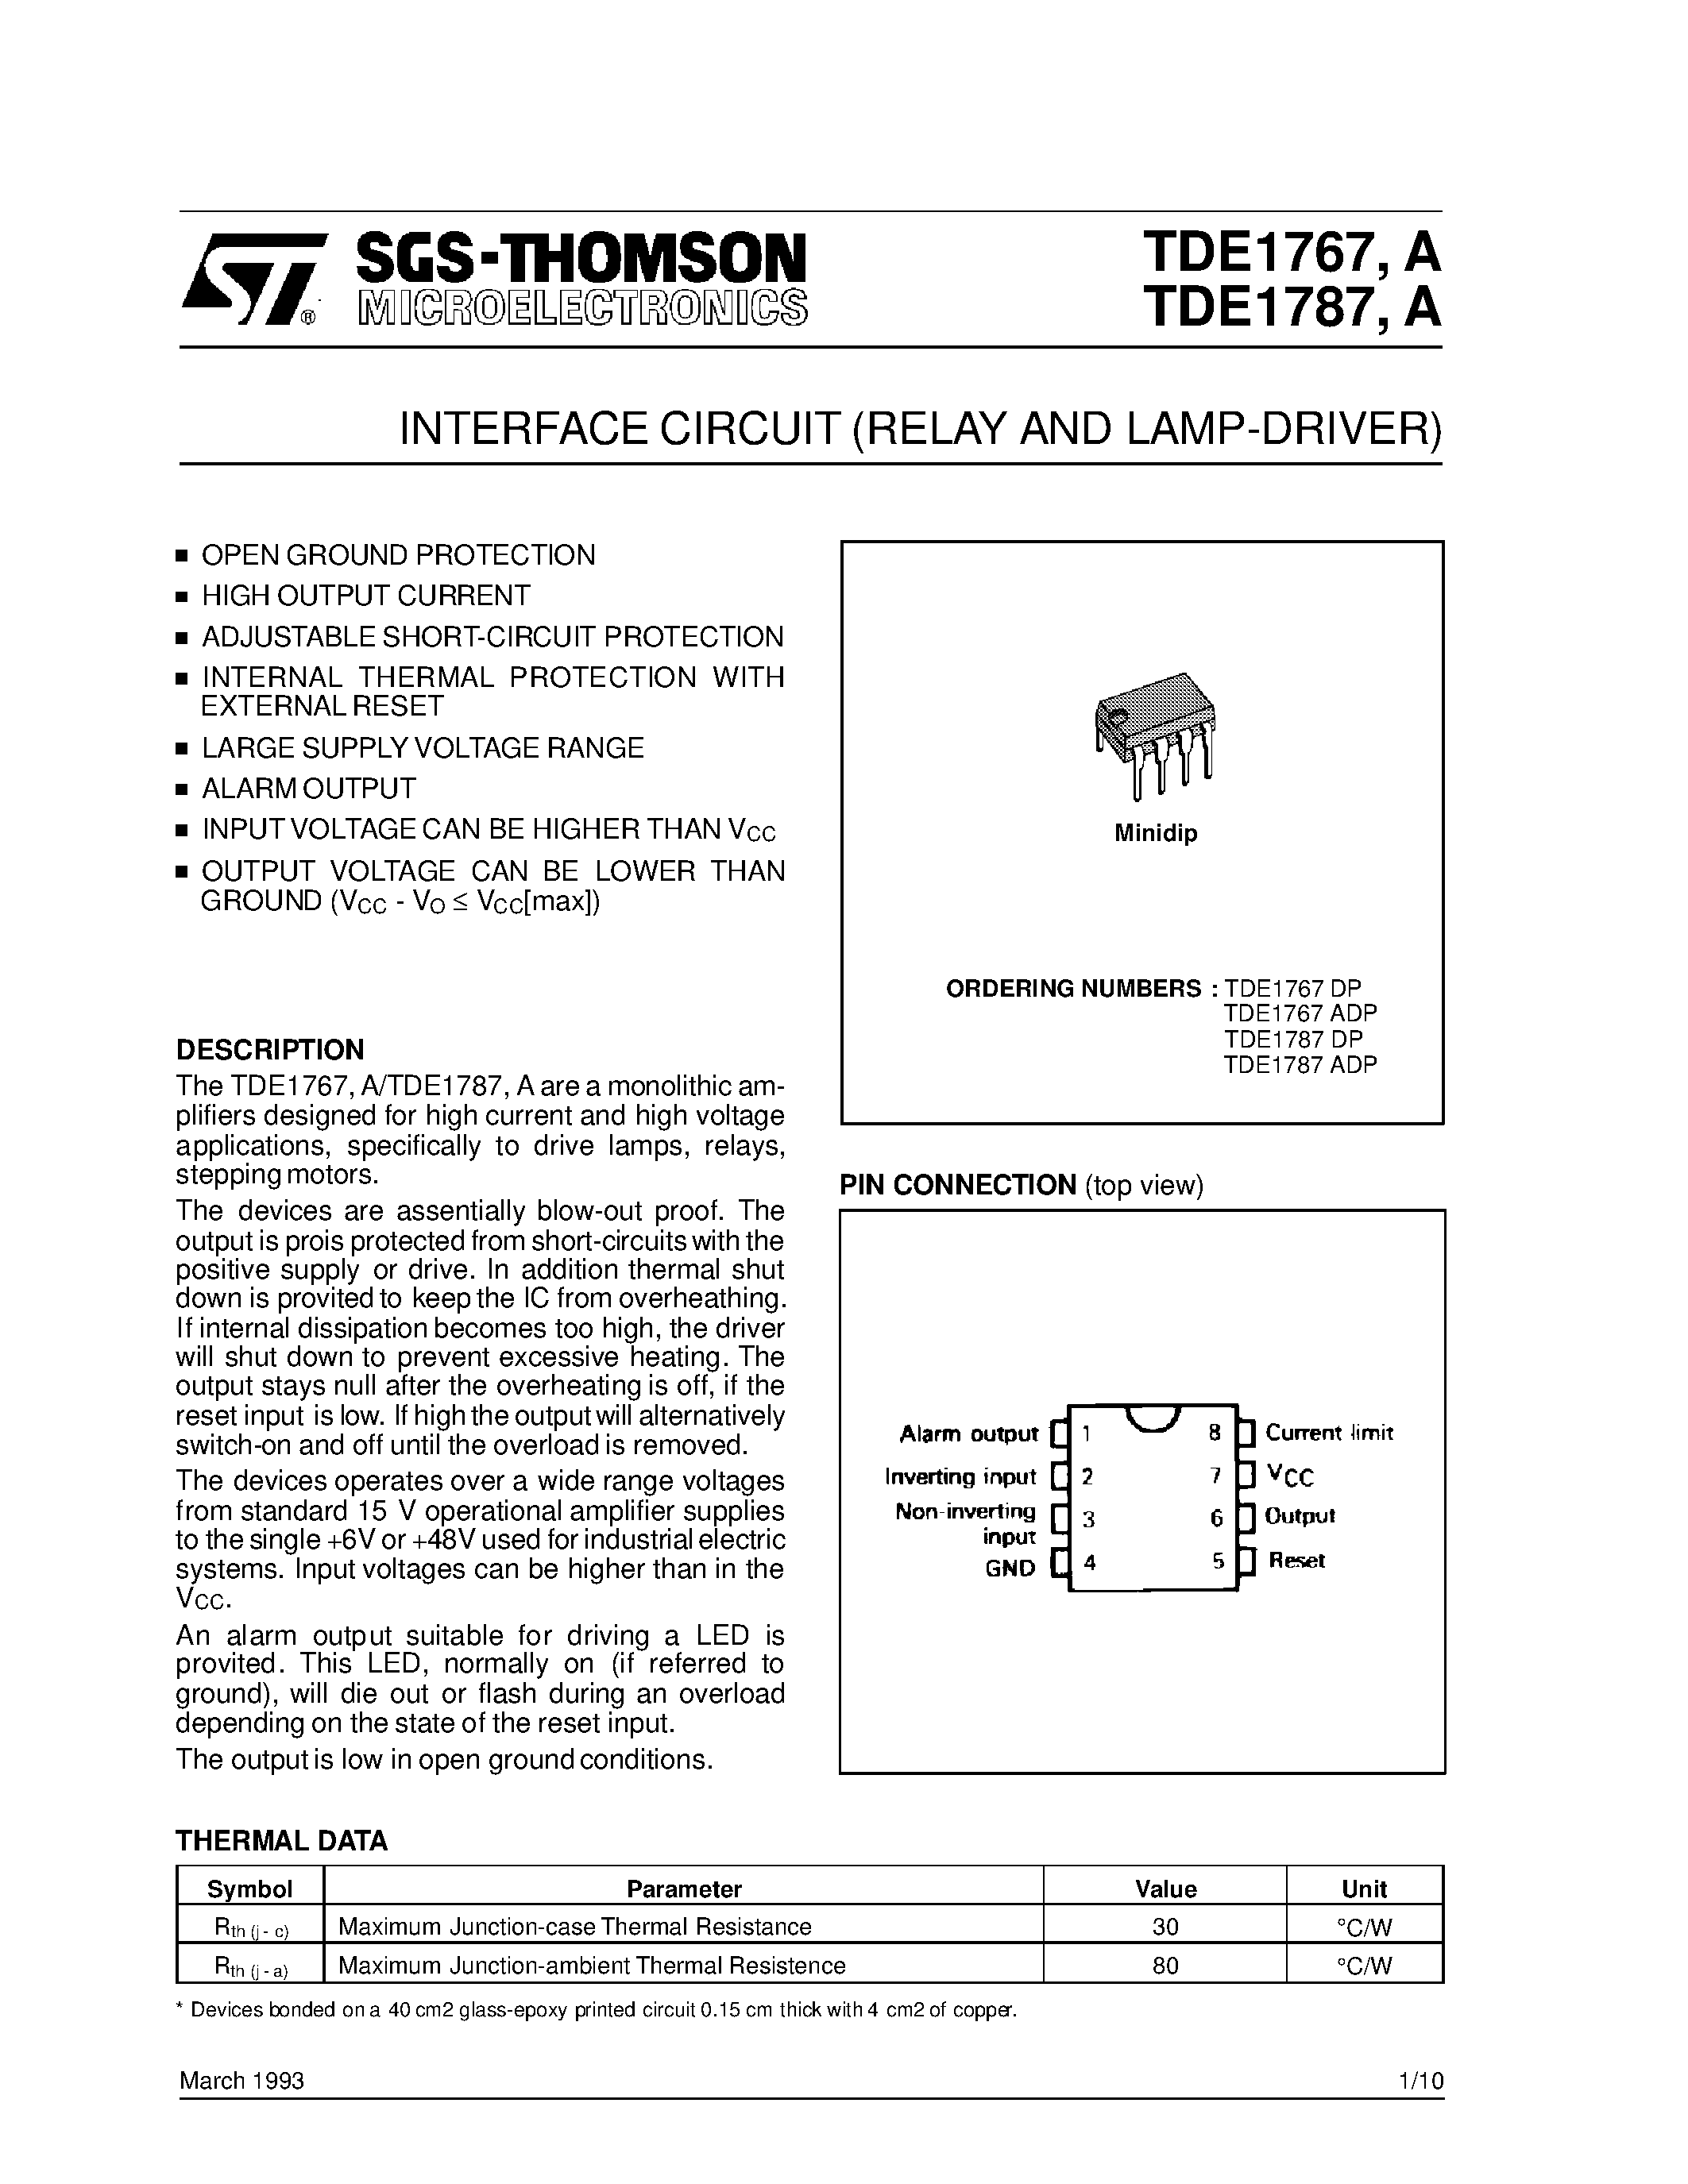 Datasheet TDE1787 - INTERFACE CIRCUIT RELAY AND LAMP-DRIVER page 1